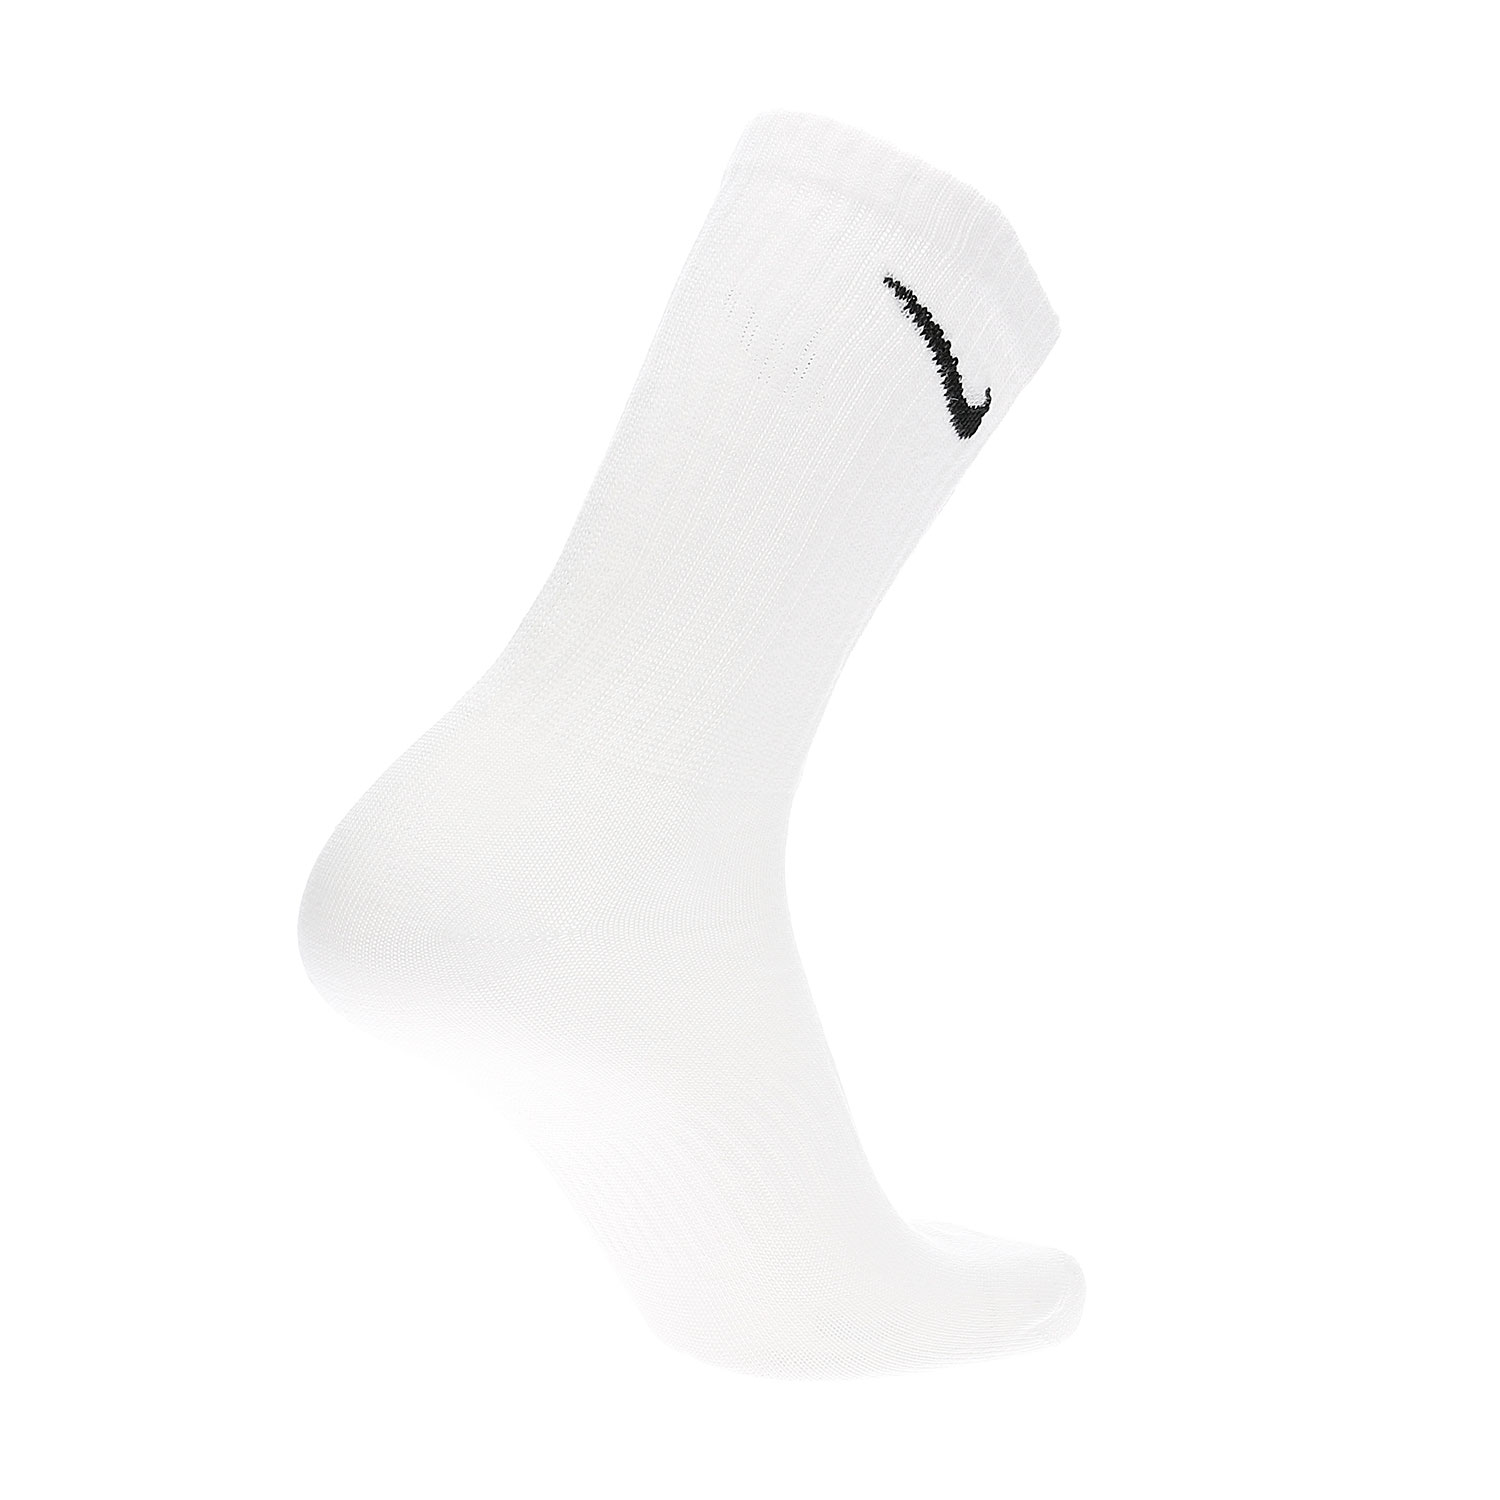 Nike Everyday Lightweight Crew x 3 Socks - White